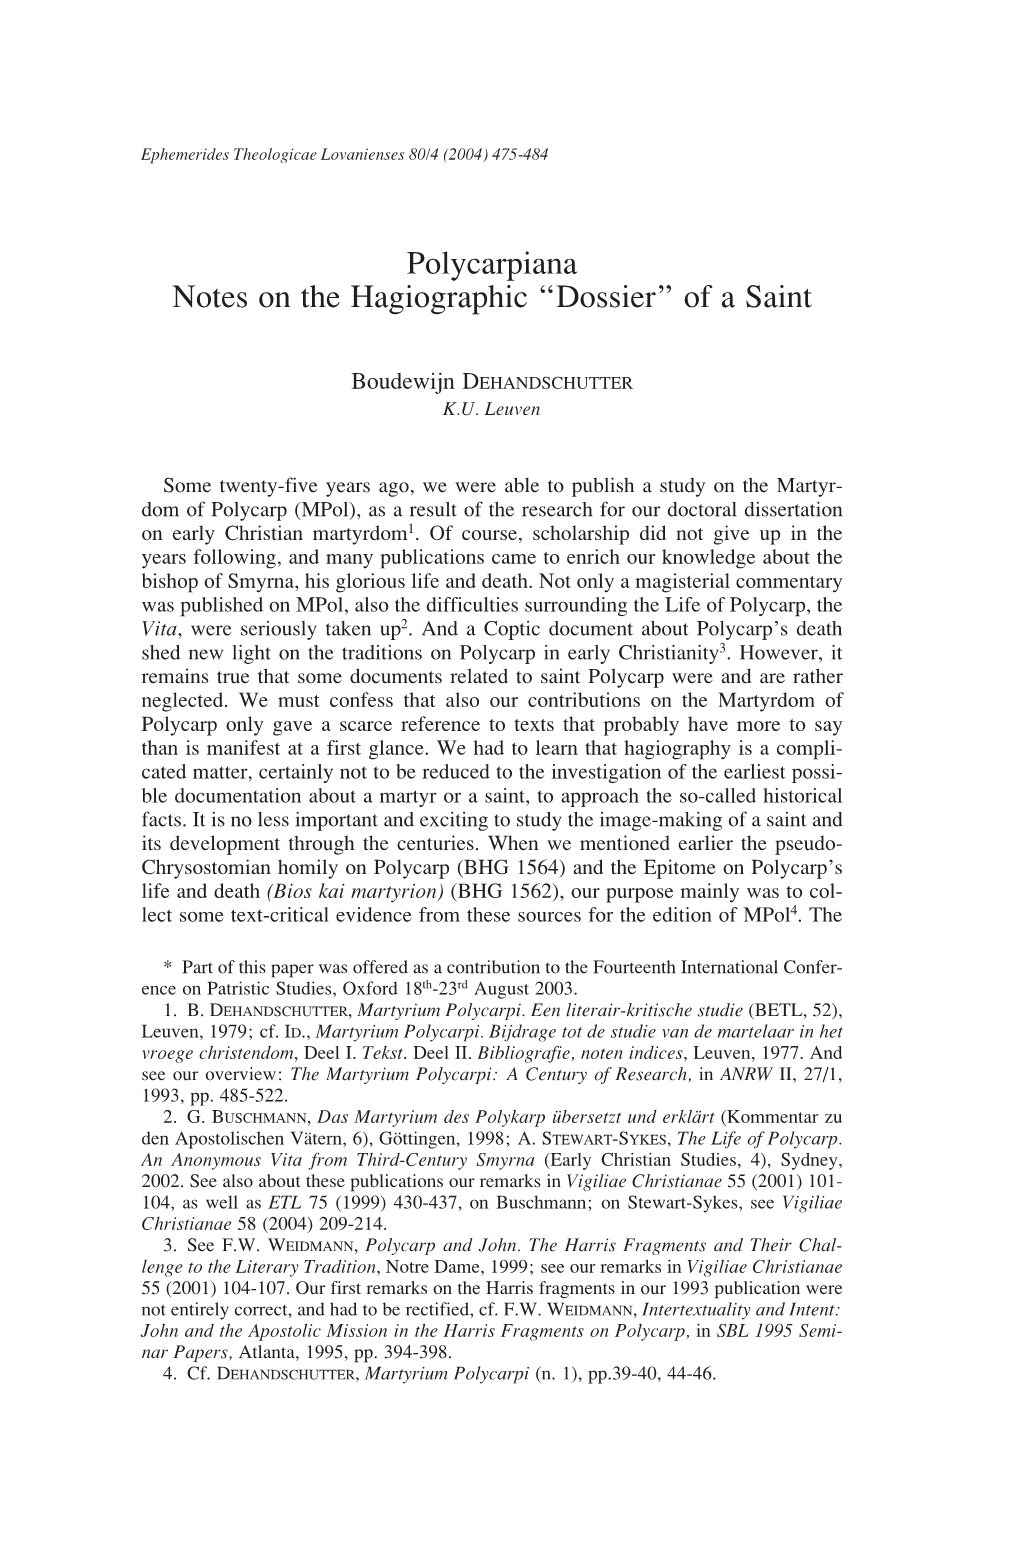 Polycarpiana Notes on the Hagiographic “Dossier” of a Saint